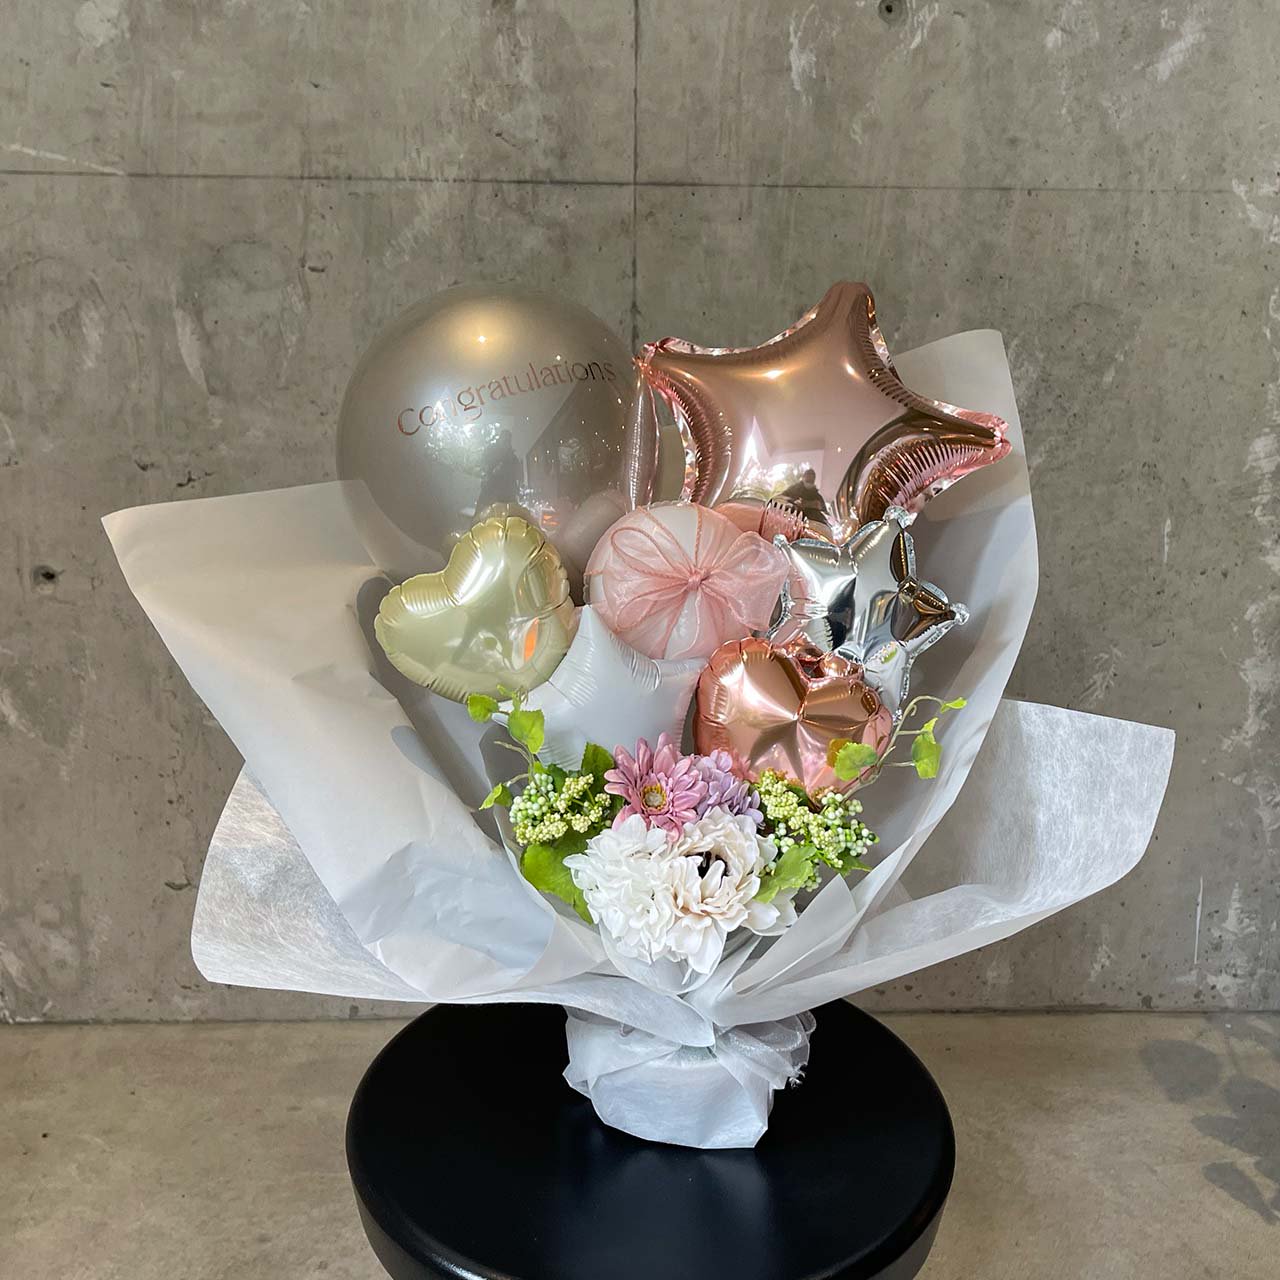 Fascinate Balloon Gift - Table top type - ファッシネイトバルーンギフト - チャビーバルーン 大阪 名古屋  滋賀にあるおしゃれなバルーン電報 バルーン装飾 バルーンギフトのことならチャビーバルーン